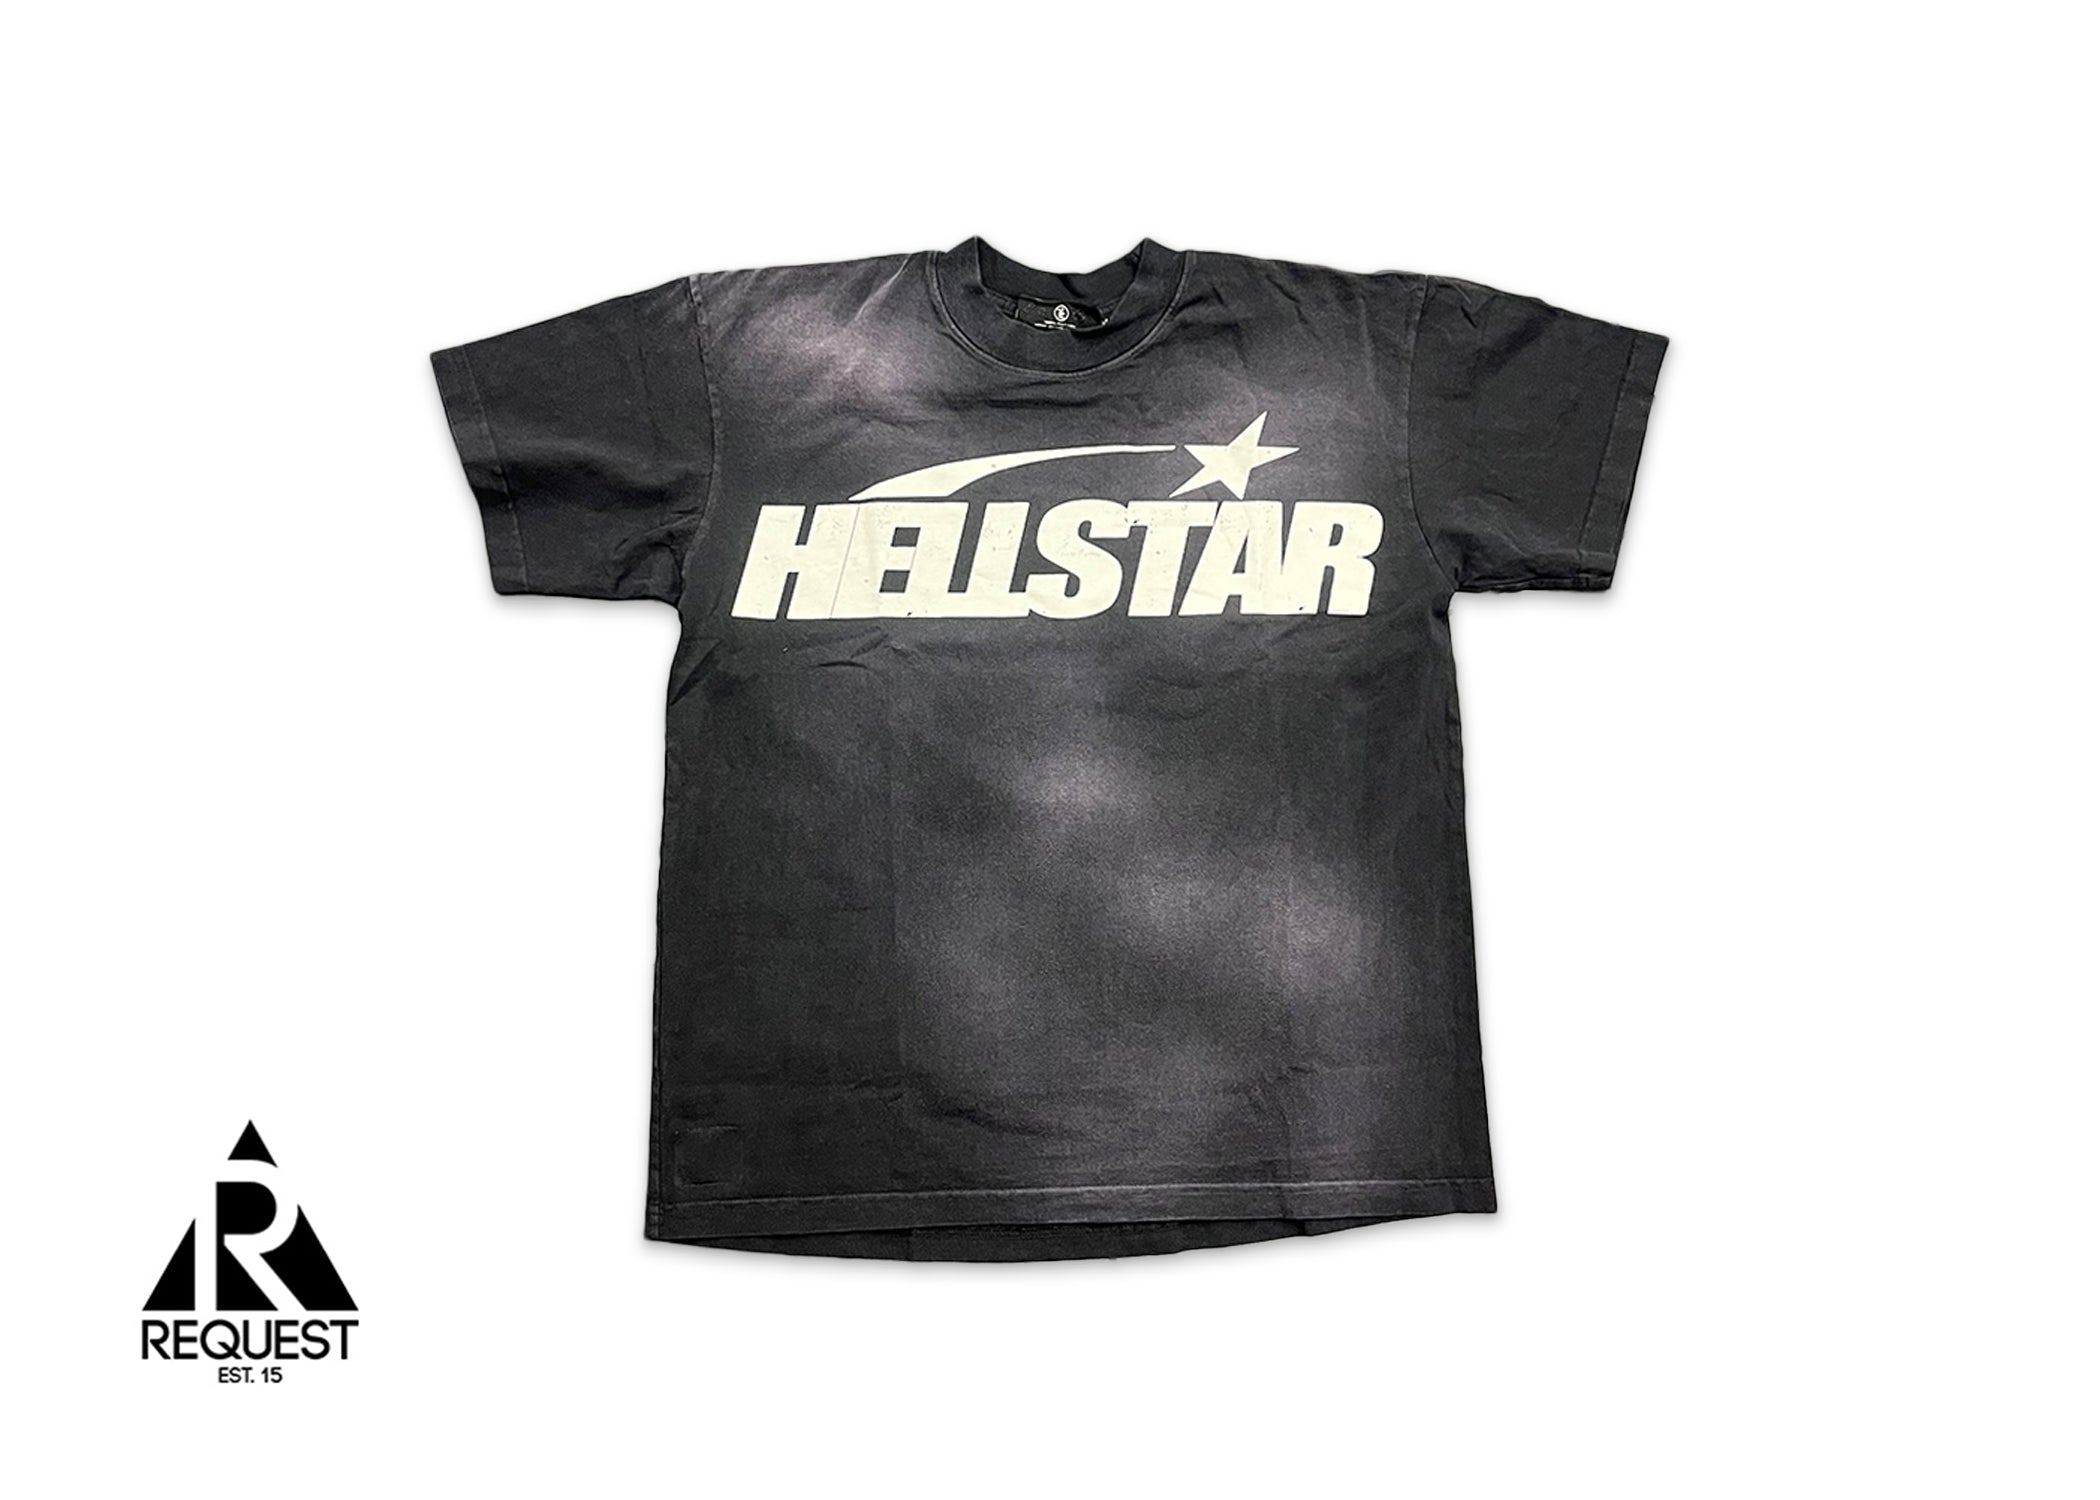 HellStar Classic Tee "Black"